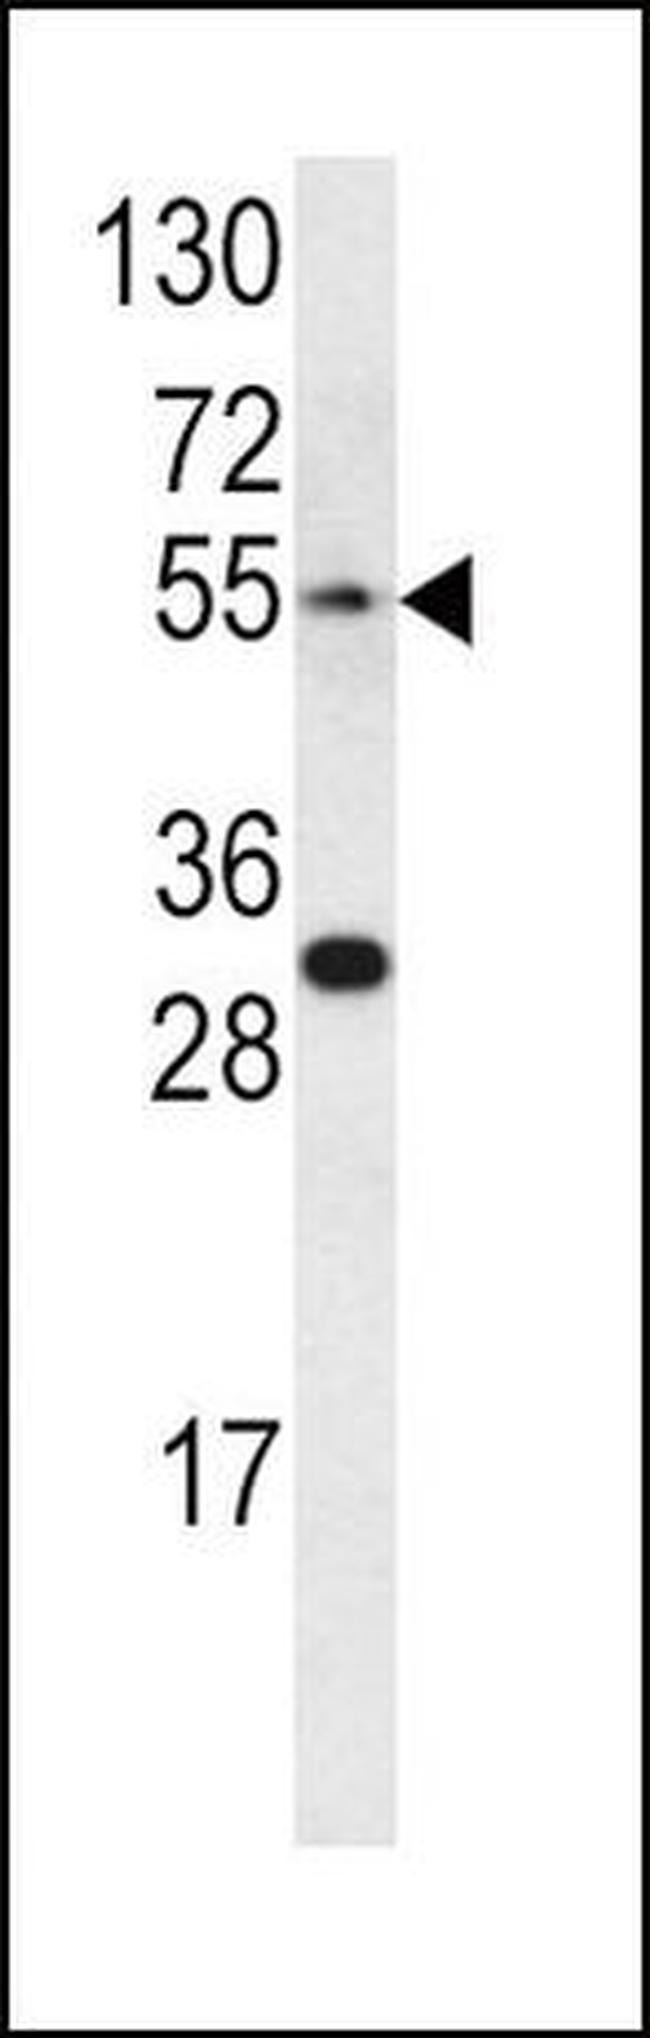 Endothelin A Receptor Antibody in Western Blot (WB)